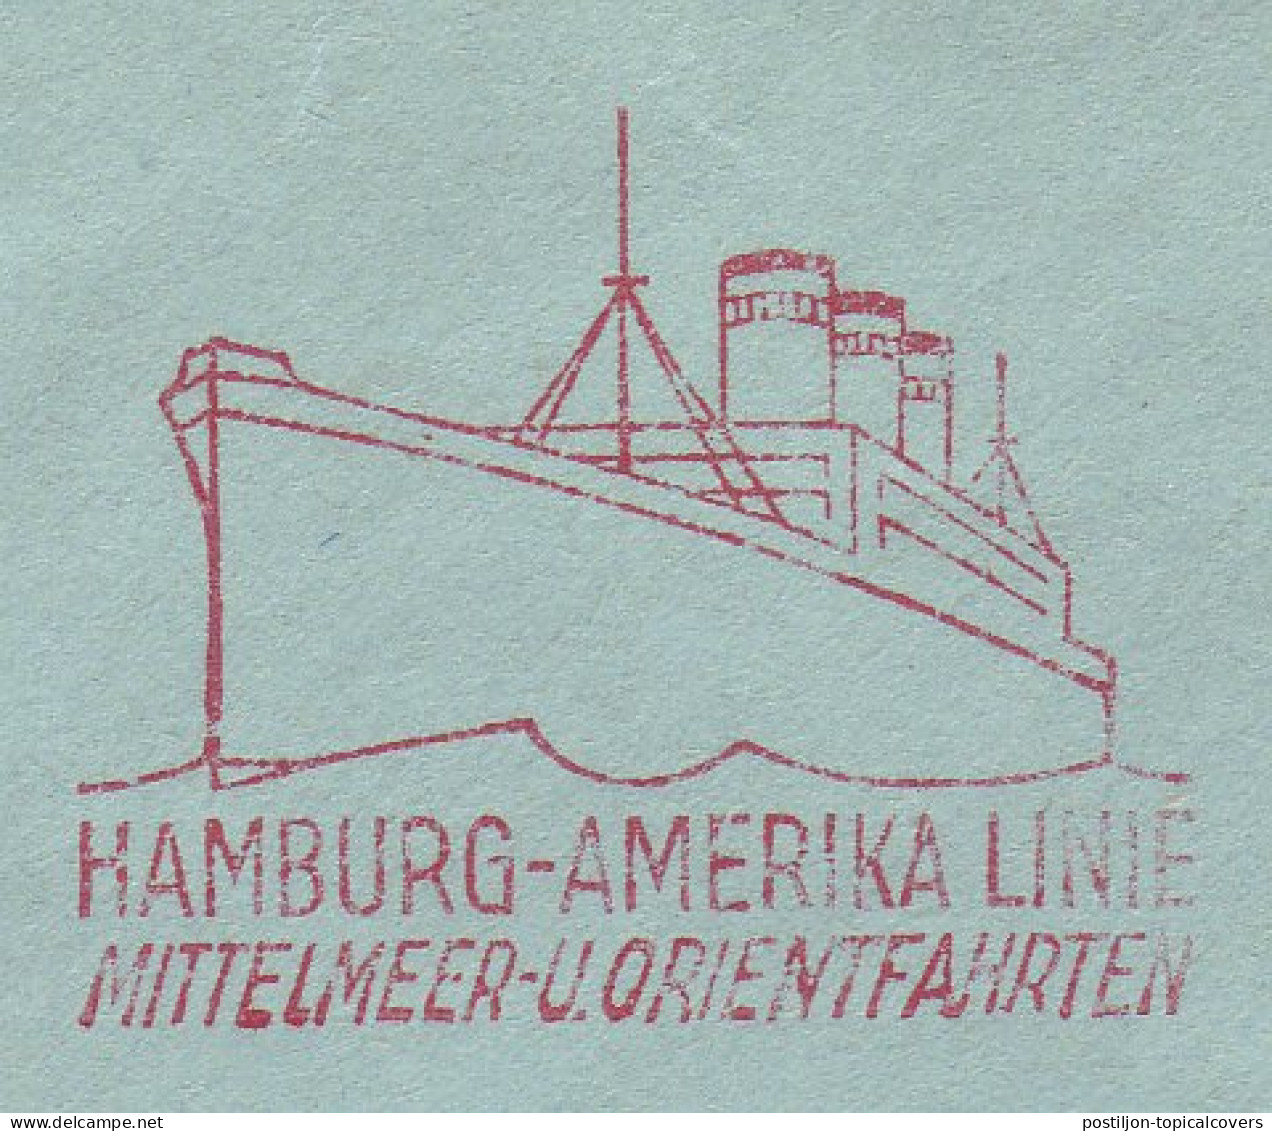 Illustrated Meter Cover Deutsches Reich / Germany 1936 Hamburg - America Line - Ocean Liner - Ships